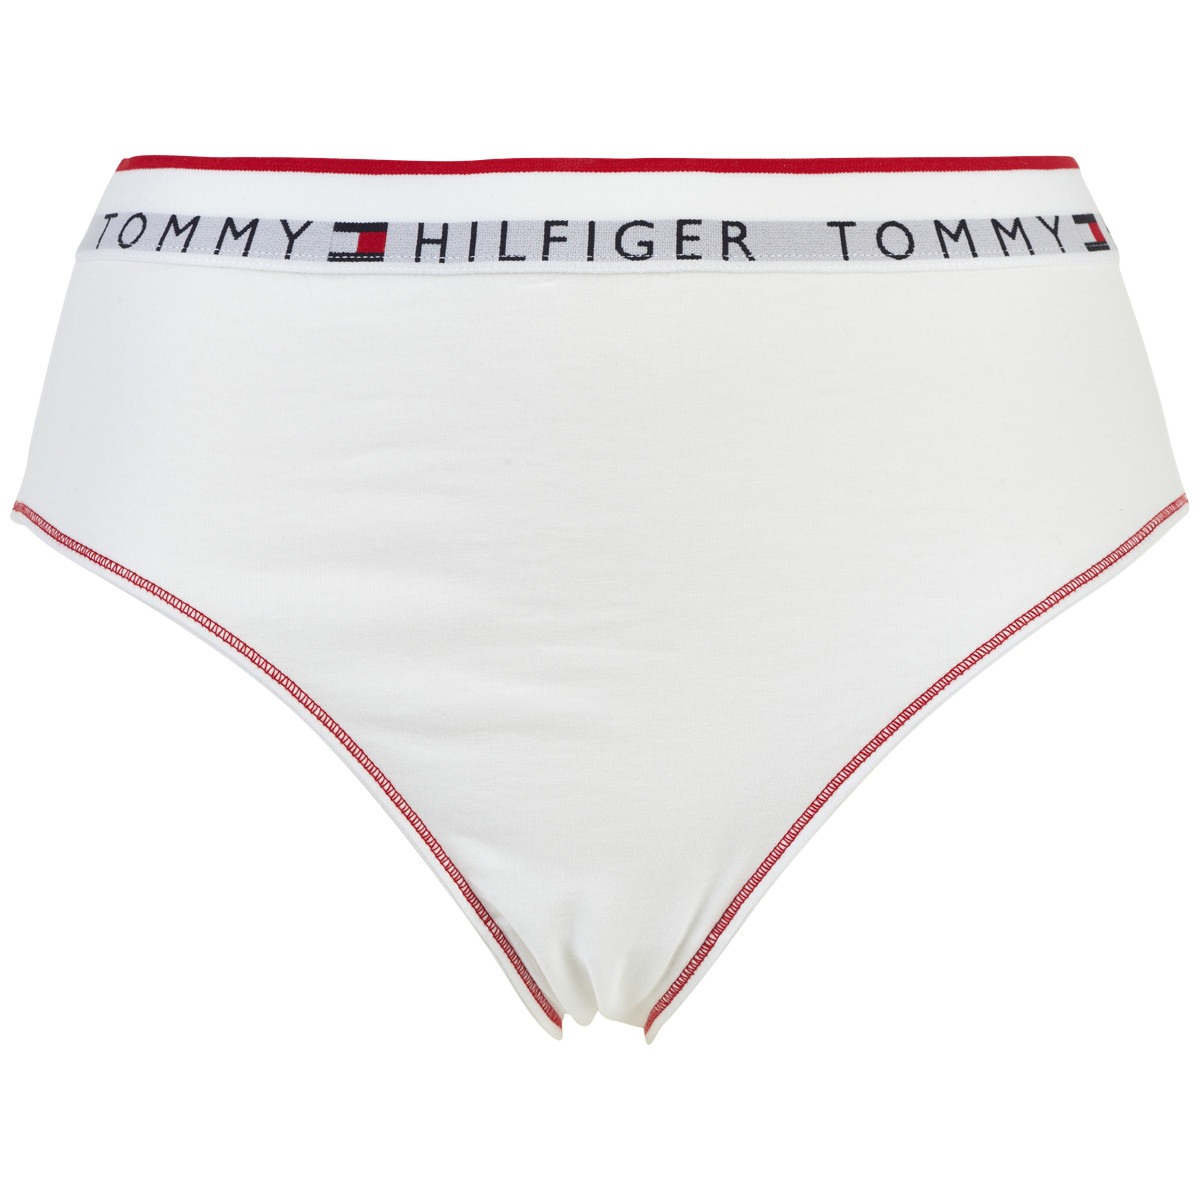 Tommy Hilfiger Lingeri Tai W Ybr, Farve: Hvid, Størrelse: M, Dame